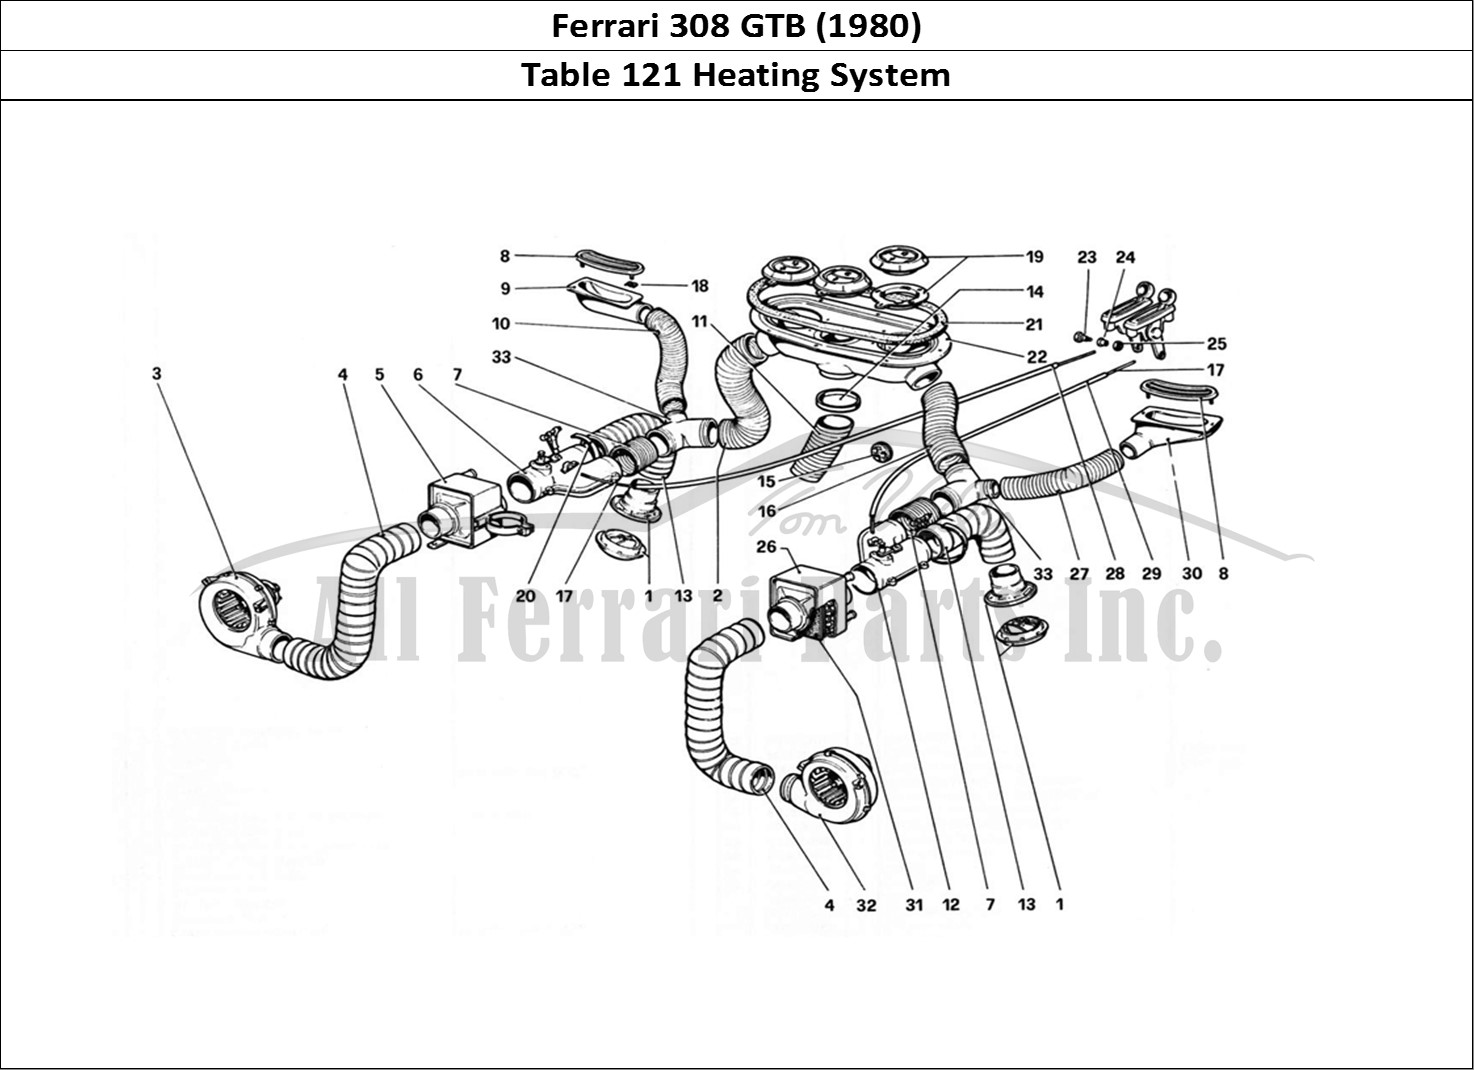 Ferrari Parts Ferrari 308 GTB (1980) Page 121 Heating System